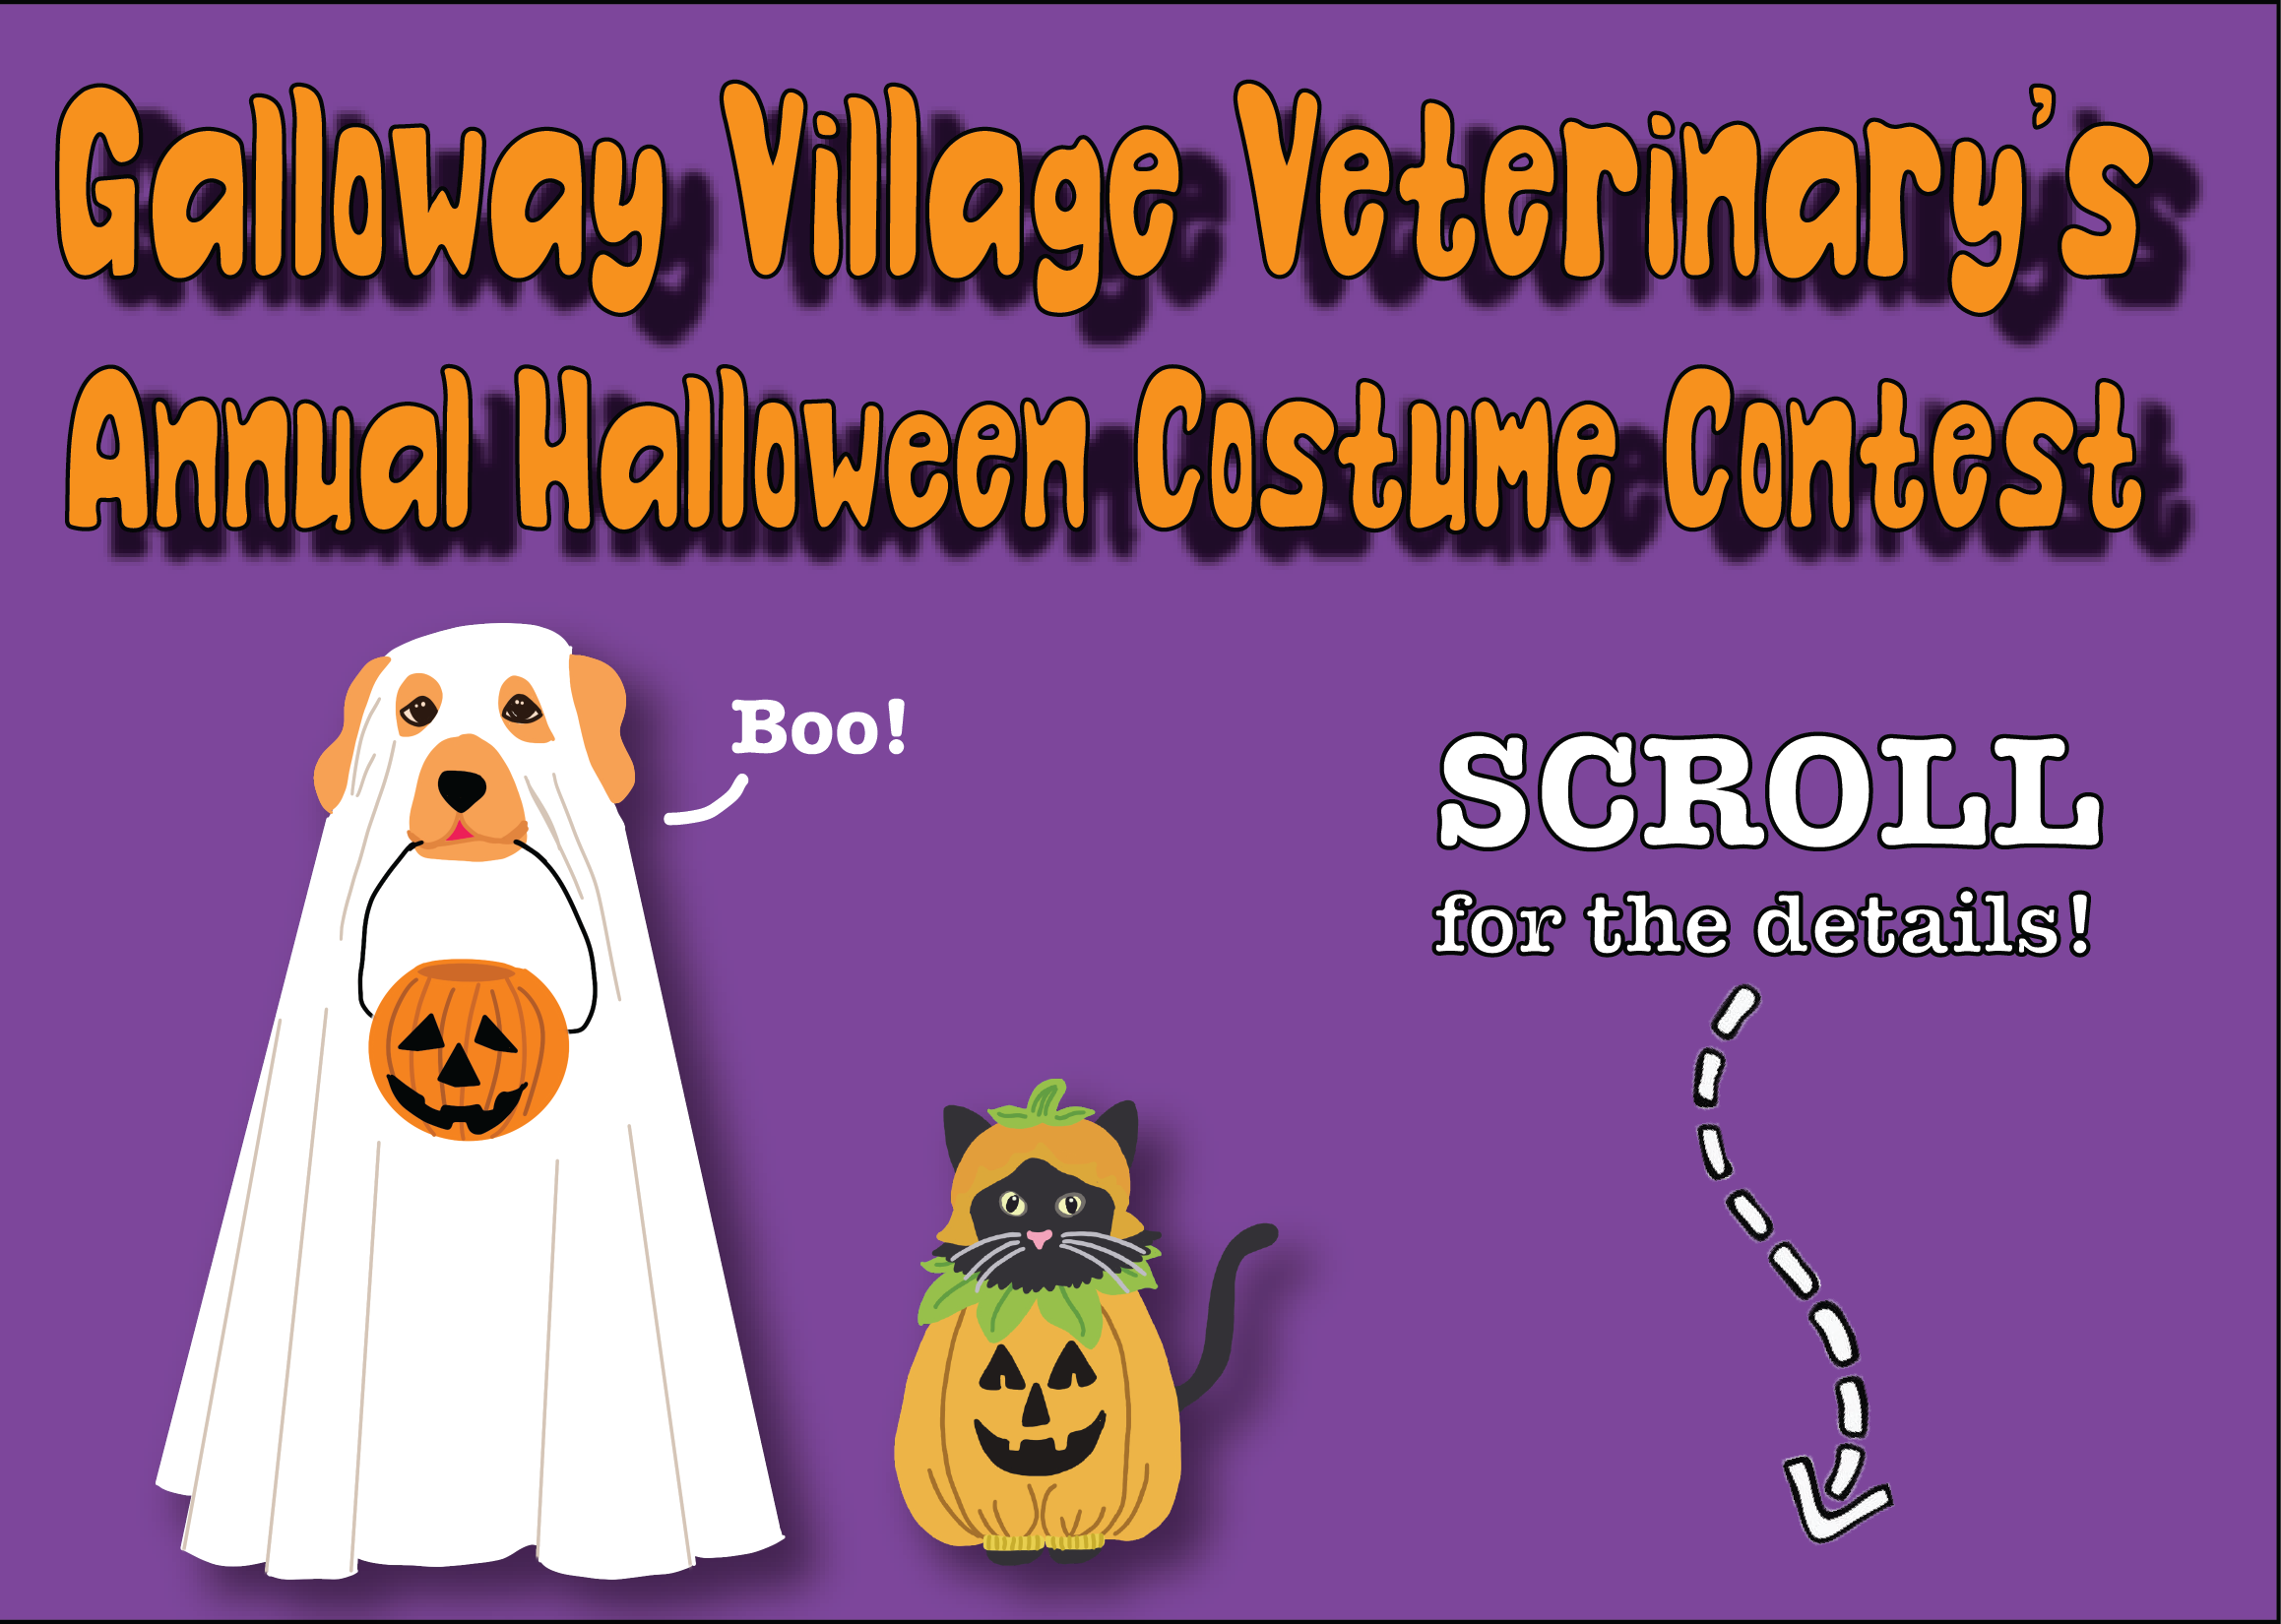 Galloway Village Veterinary's Annual Halloween Costume Contest